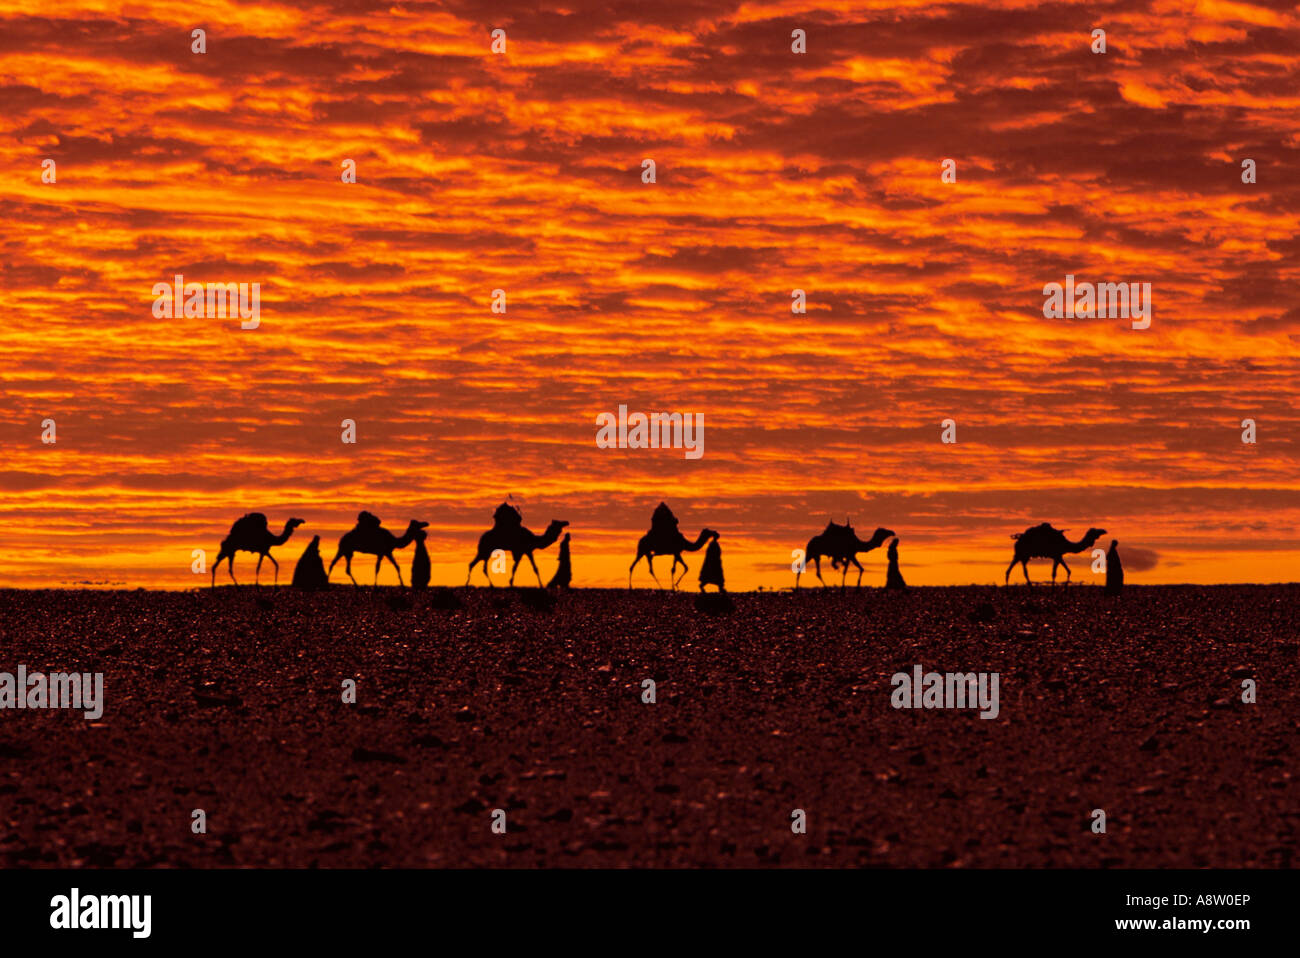 Africa. Sahara region. Silhouette of Bedouin camel train on desert horizon at sunset. Stock Photo